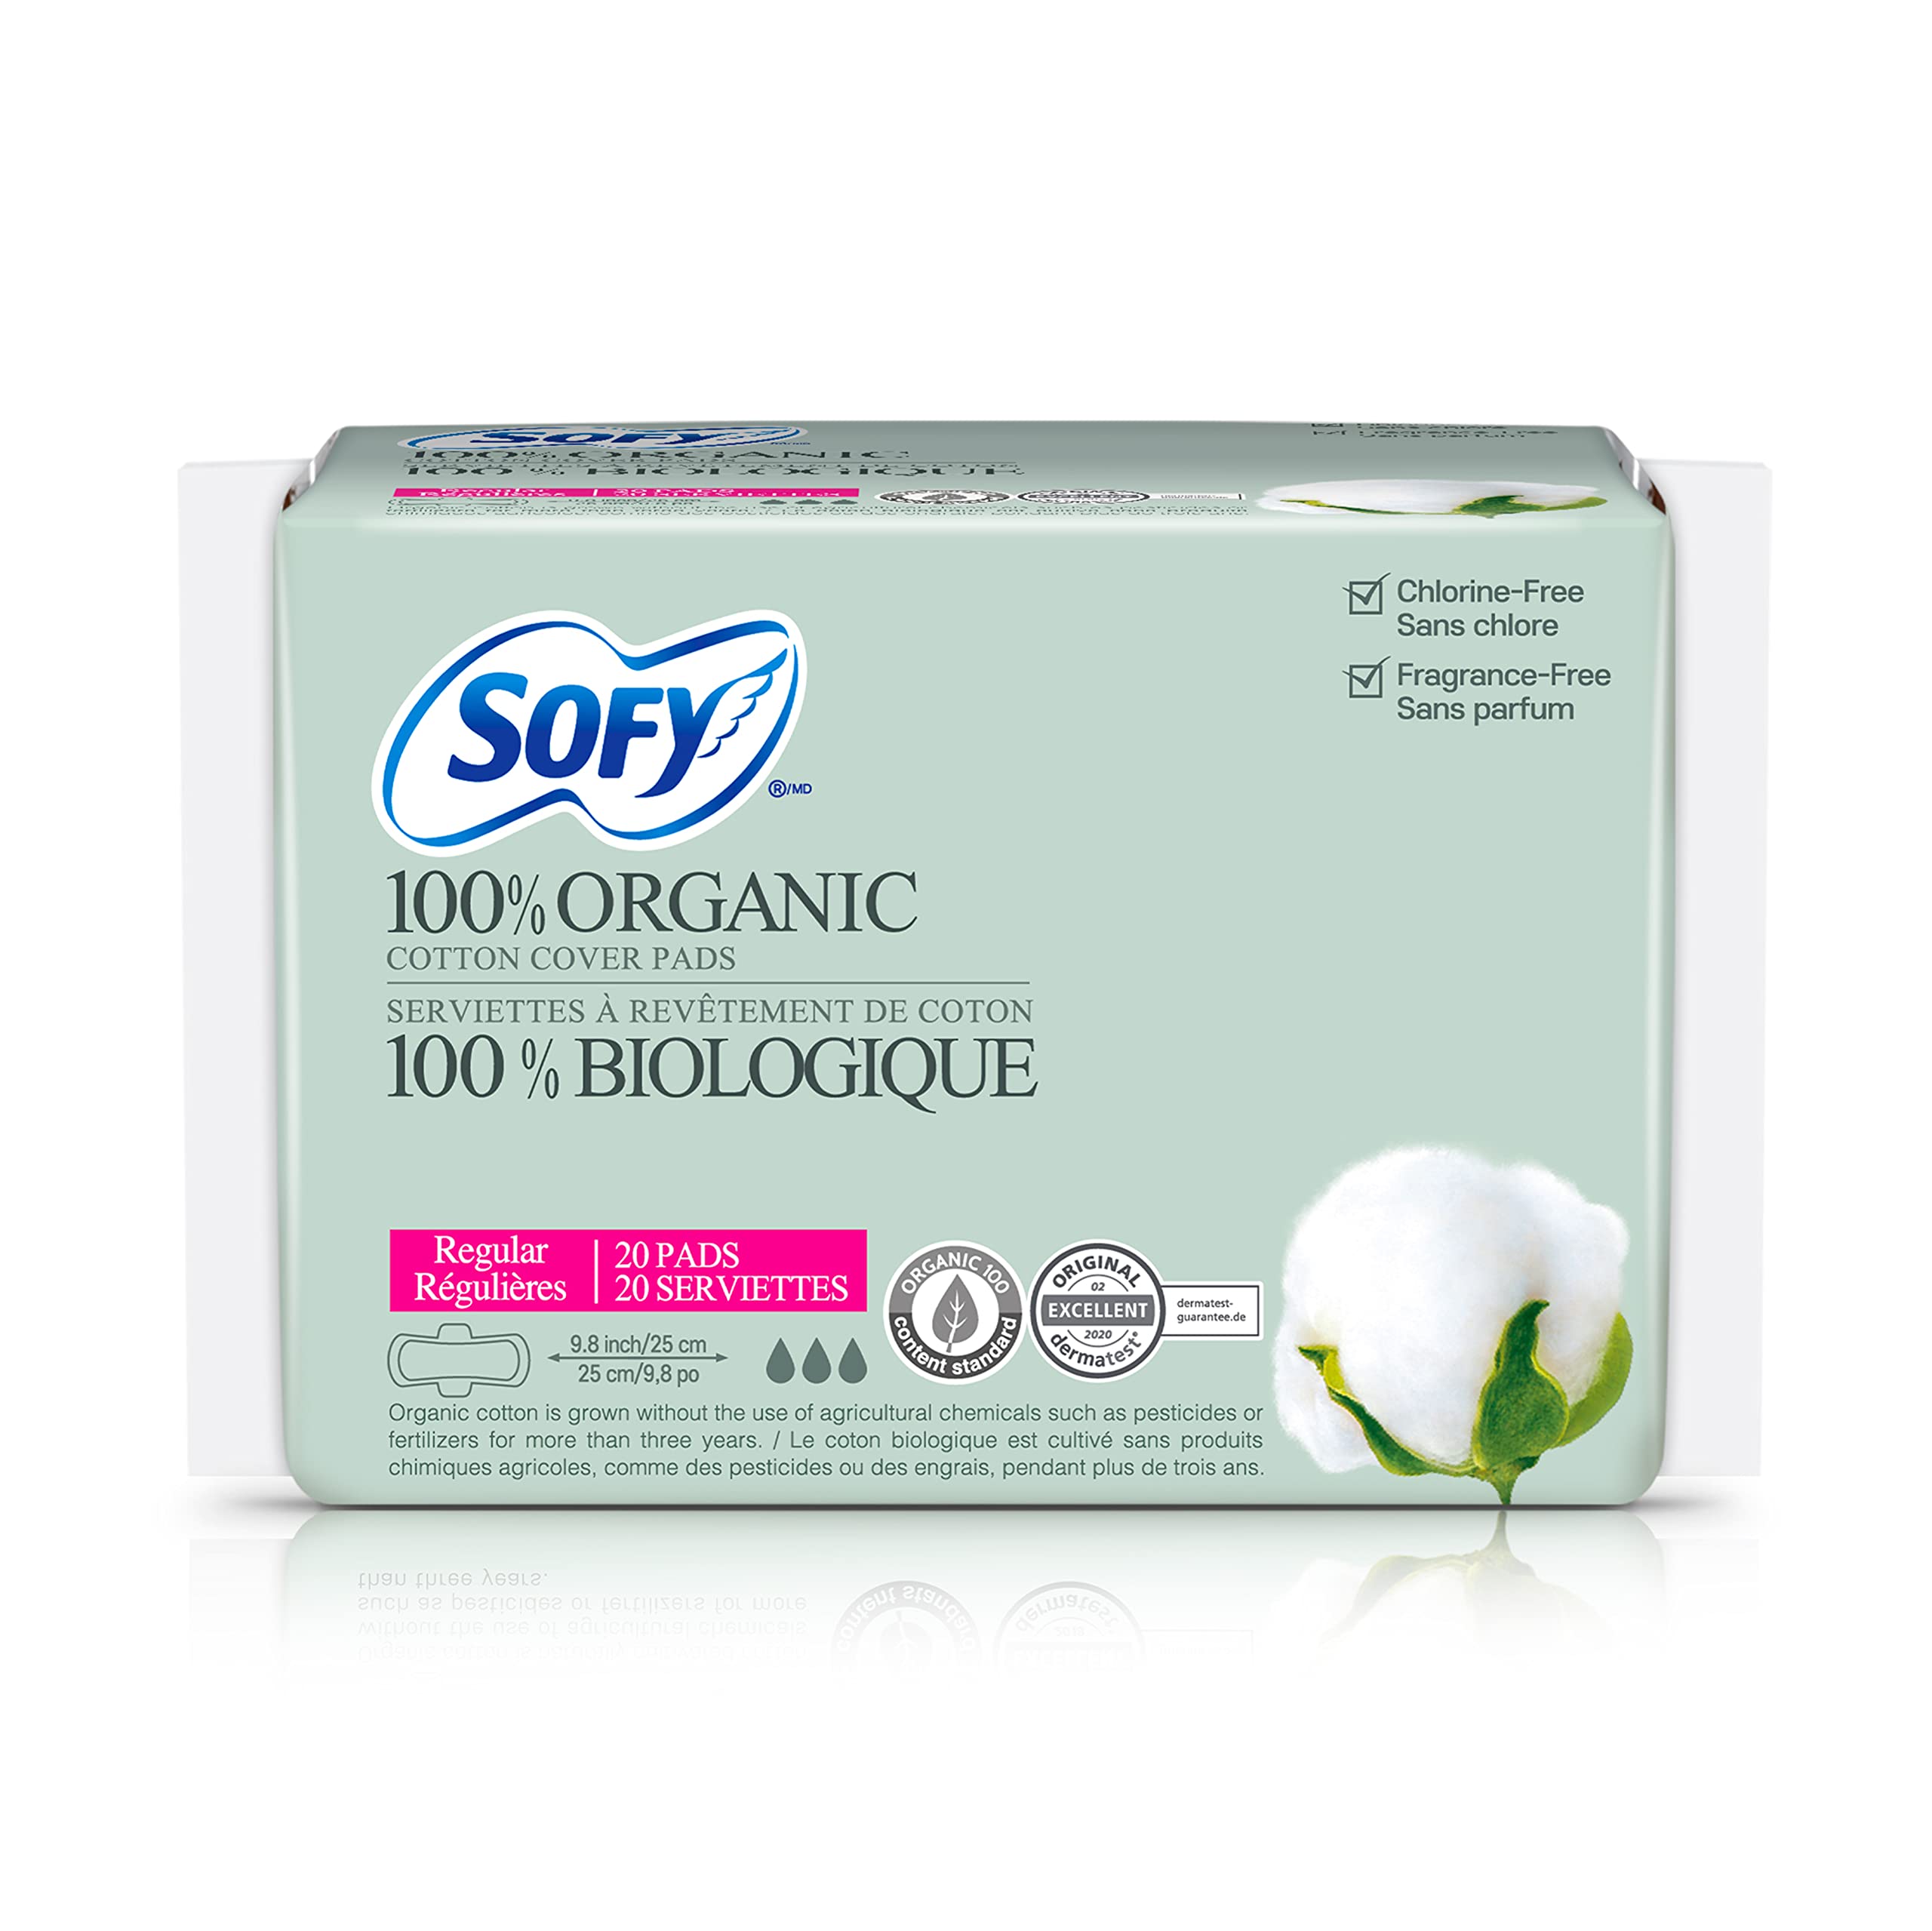 Super Soft Organic Apparel